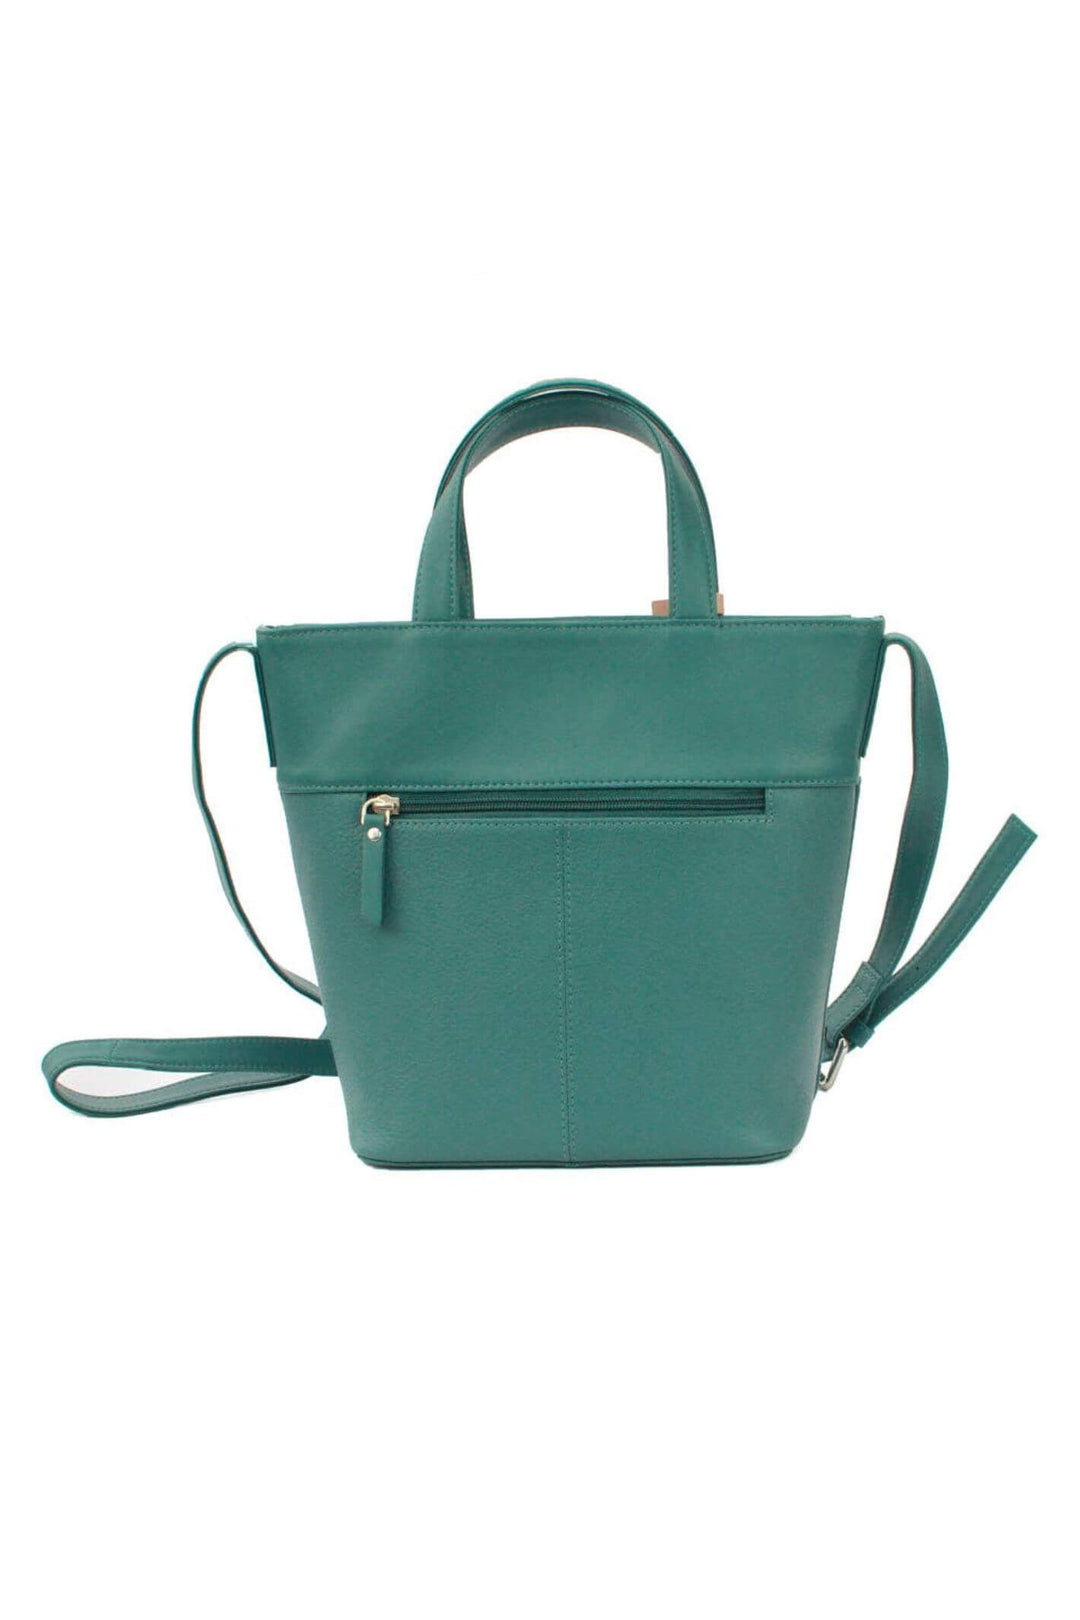 Aqua Leather Nadia Handbag